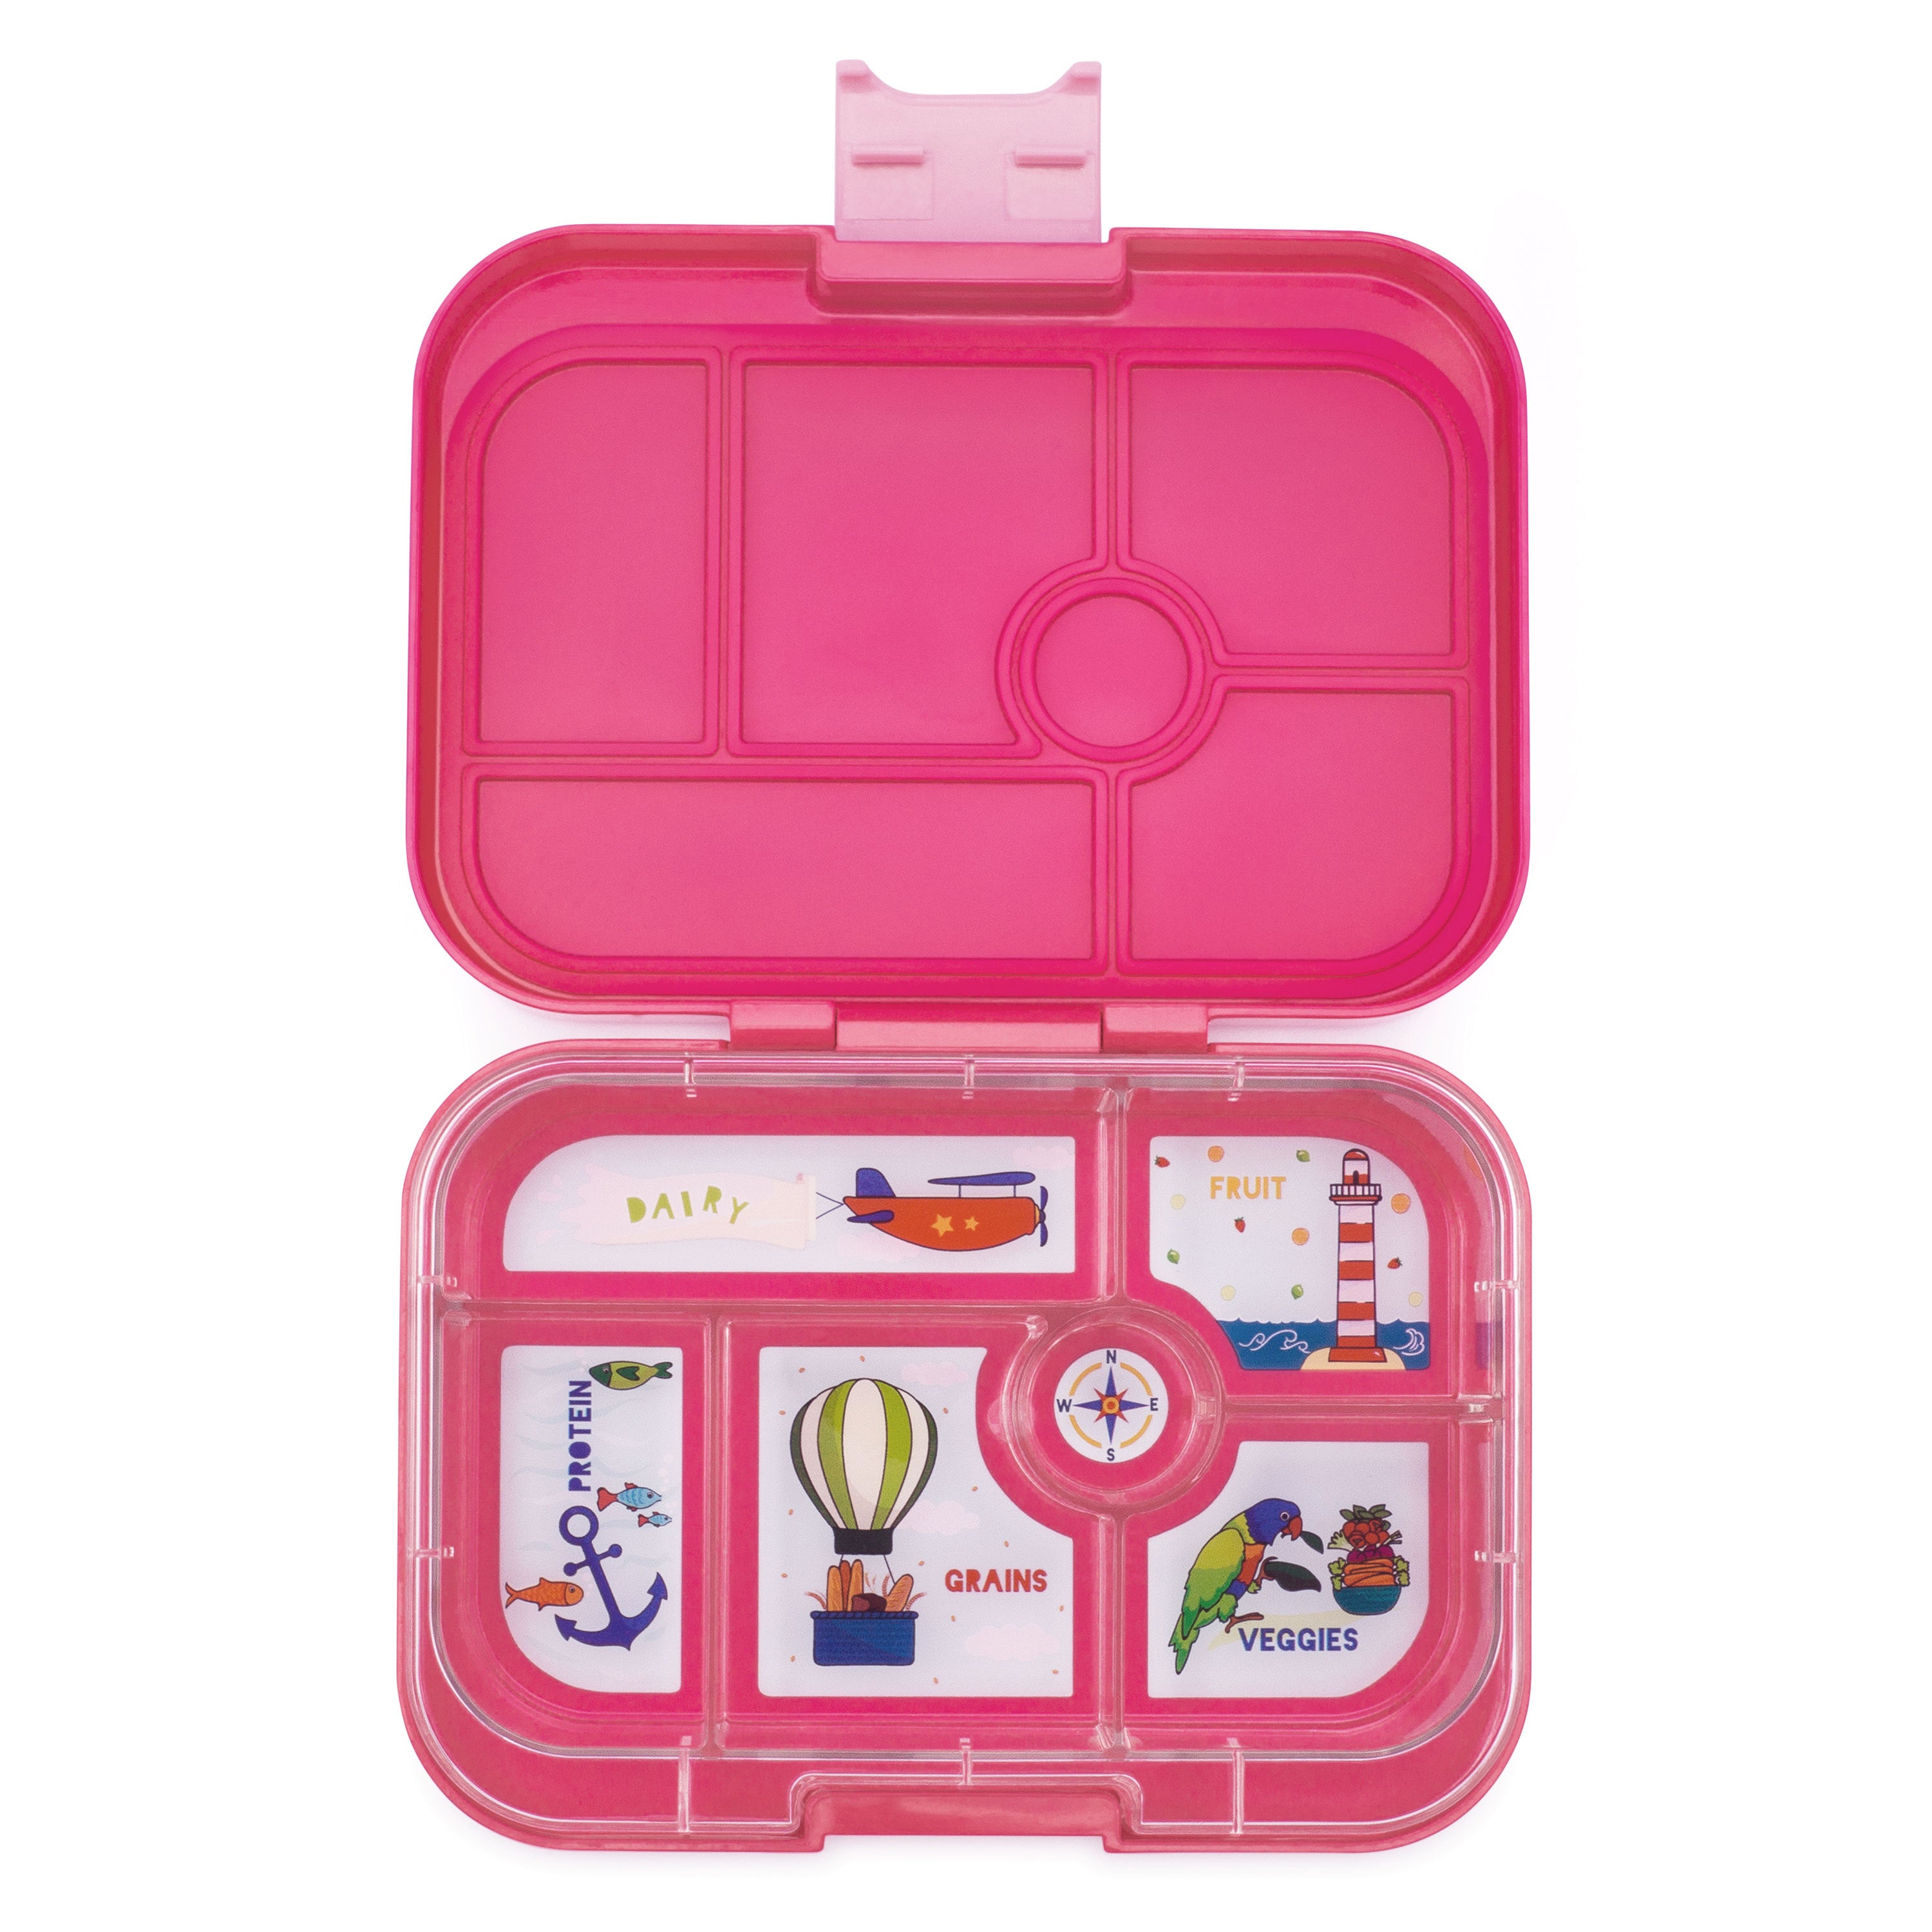 yumbox-original-lotus-pink-6-compartment-lunch-box- (2)